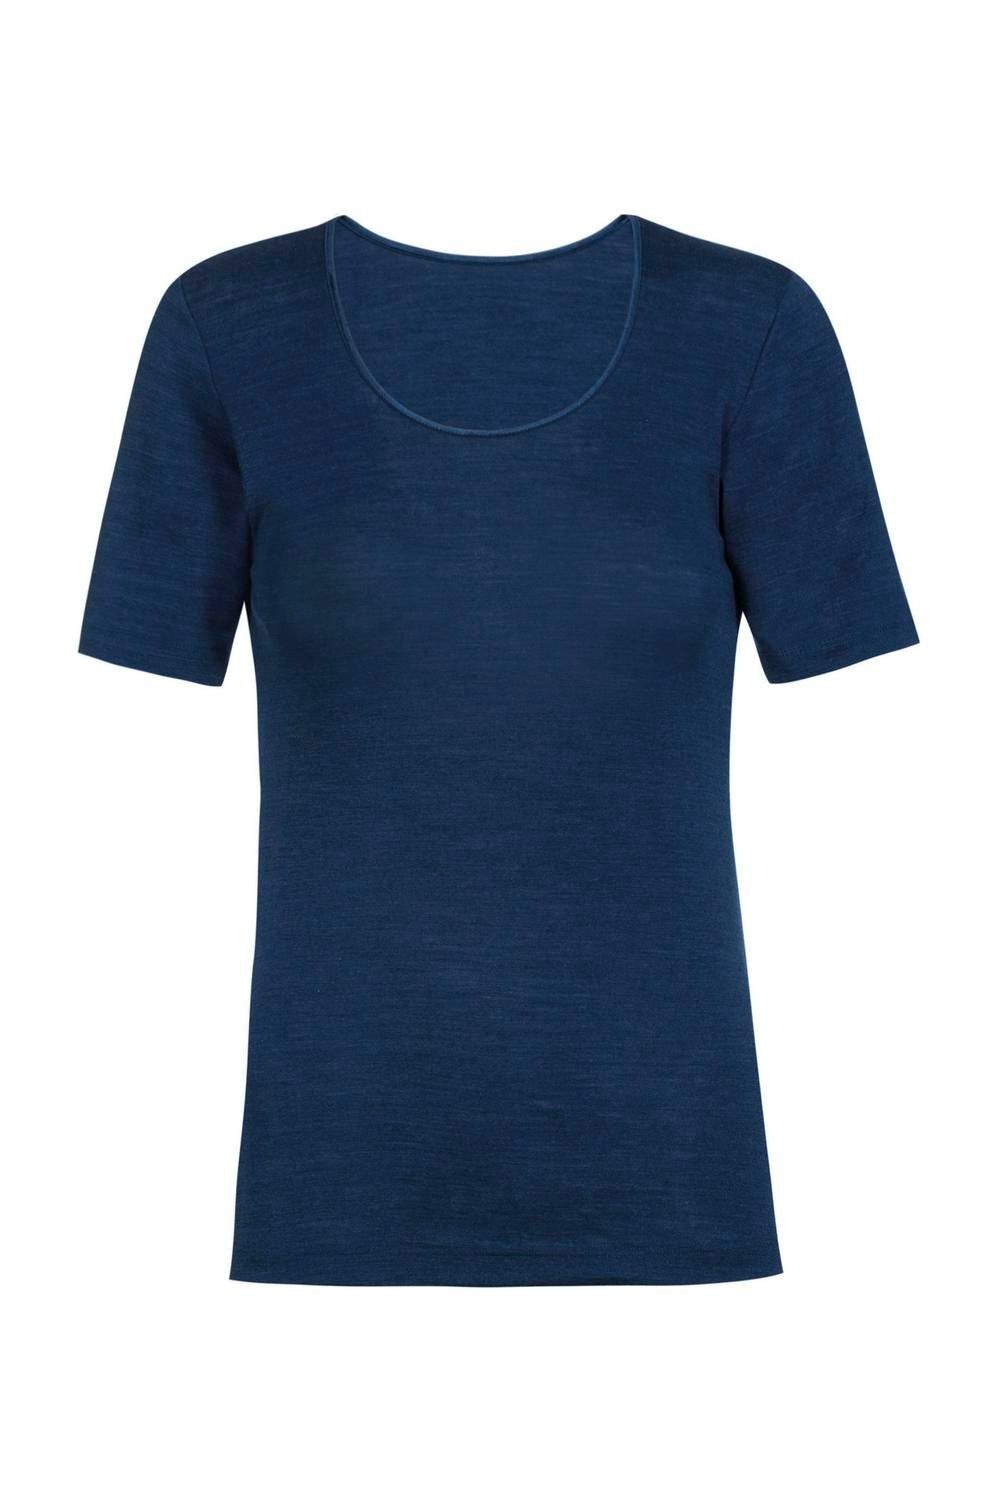 Mey ink T-Shirt 1/2 Ärmel blue Spencer